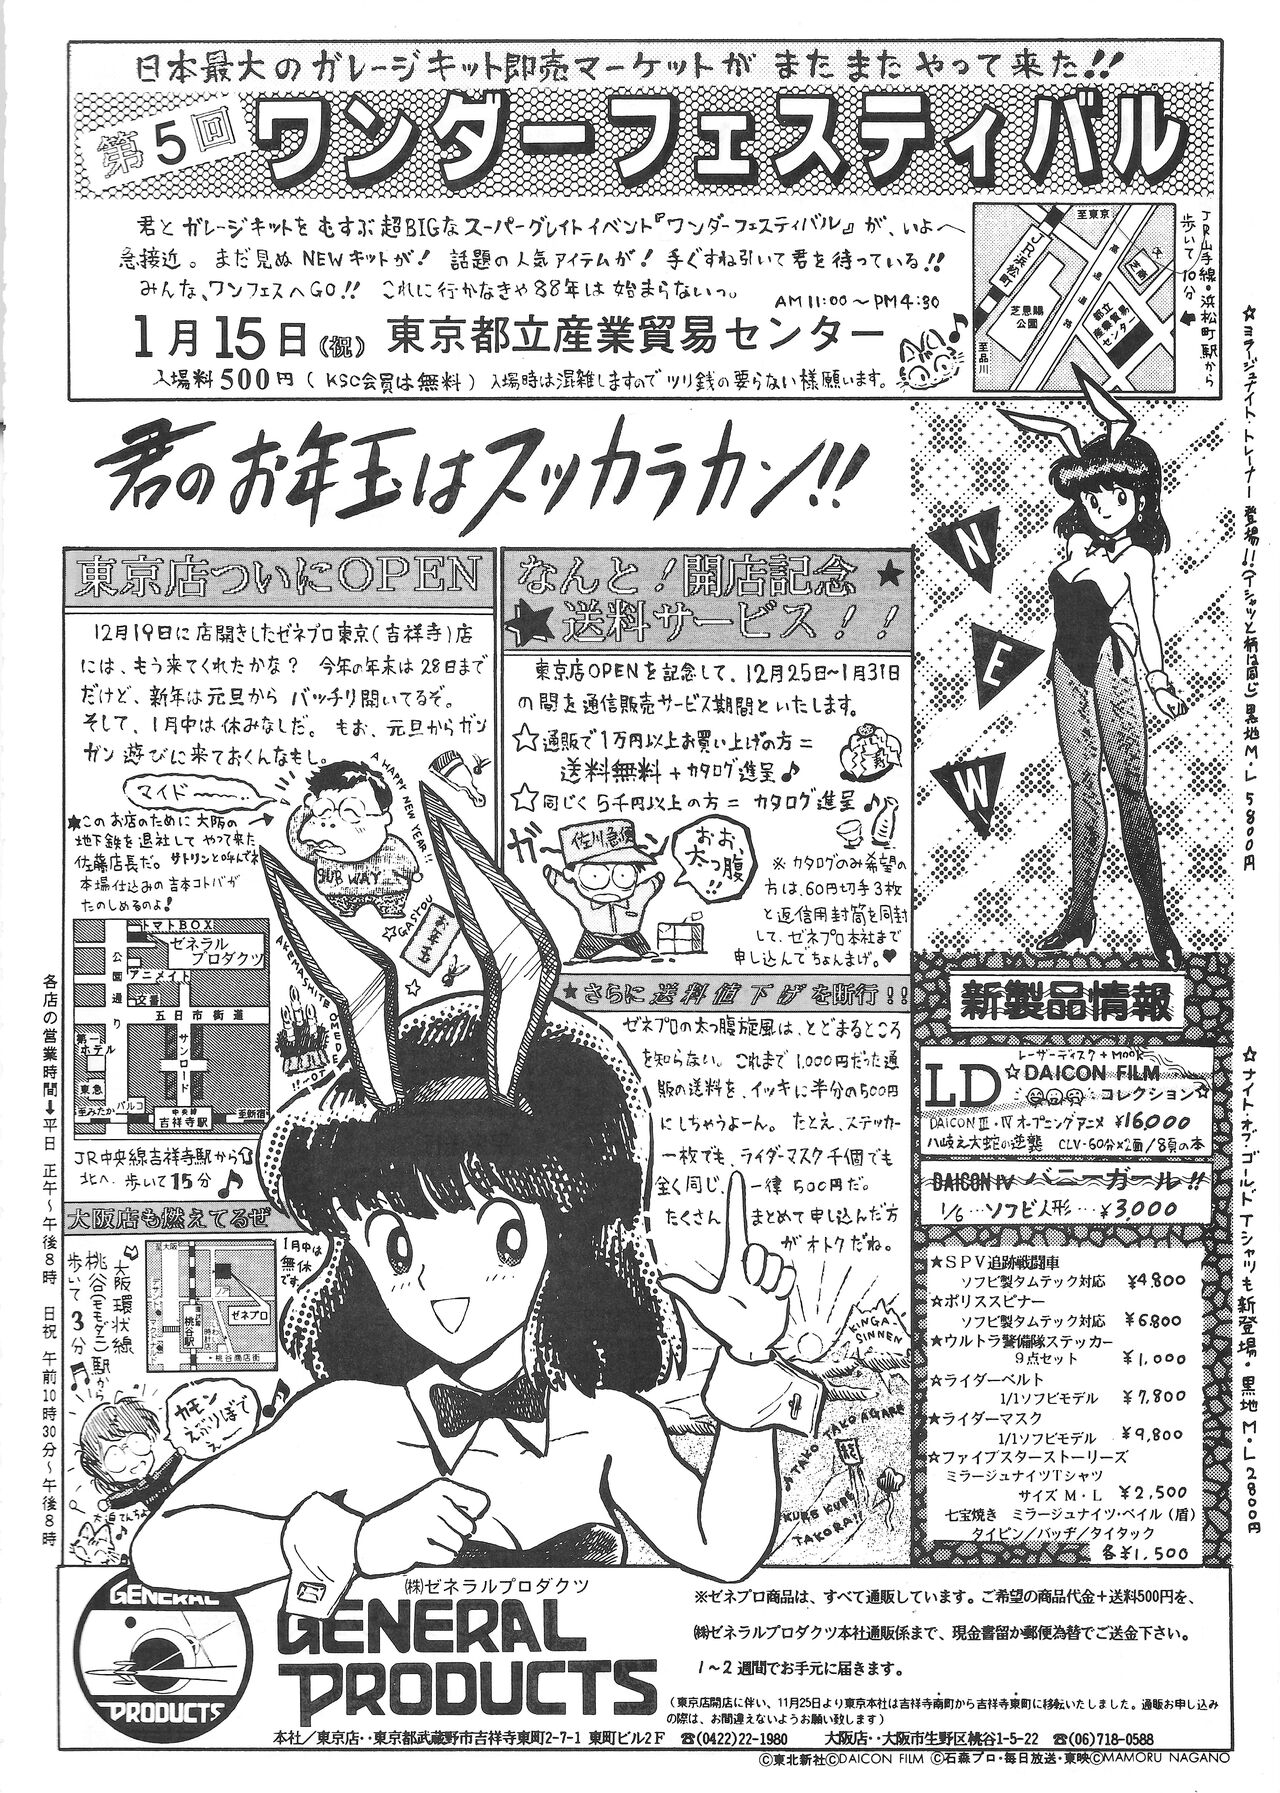 Hobby Japan Magazine 1988 Issue No.224 180